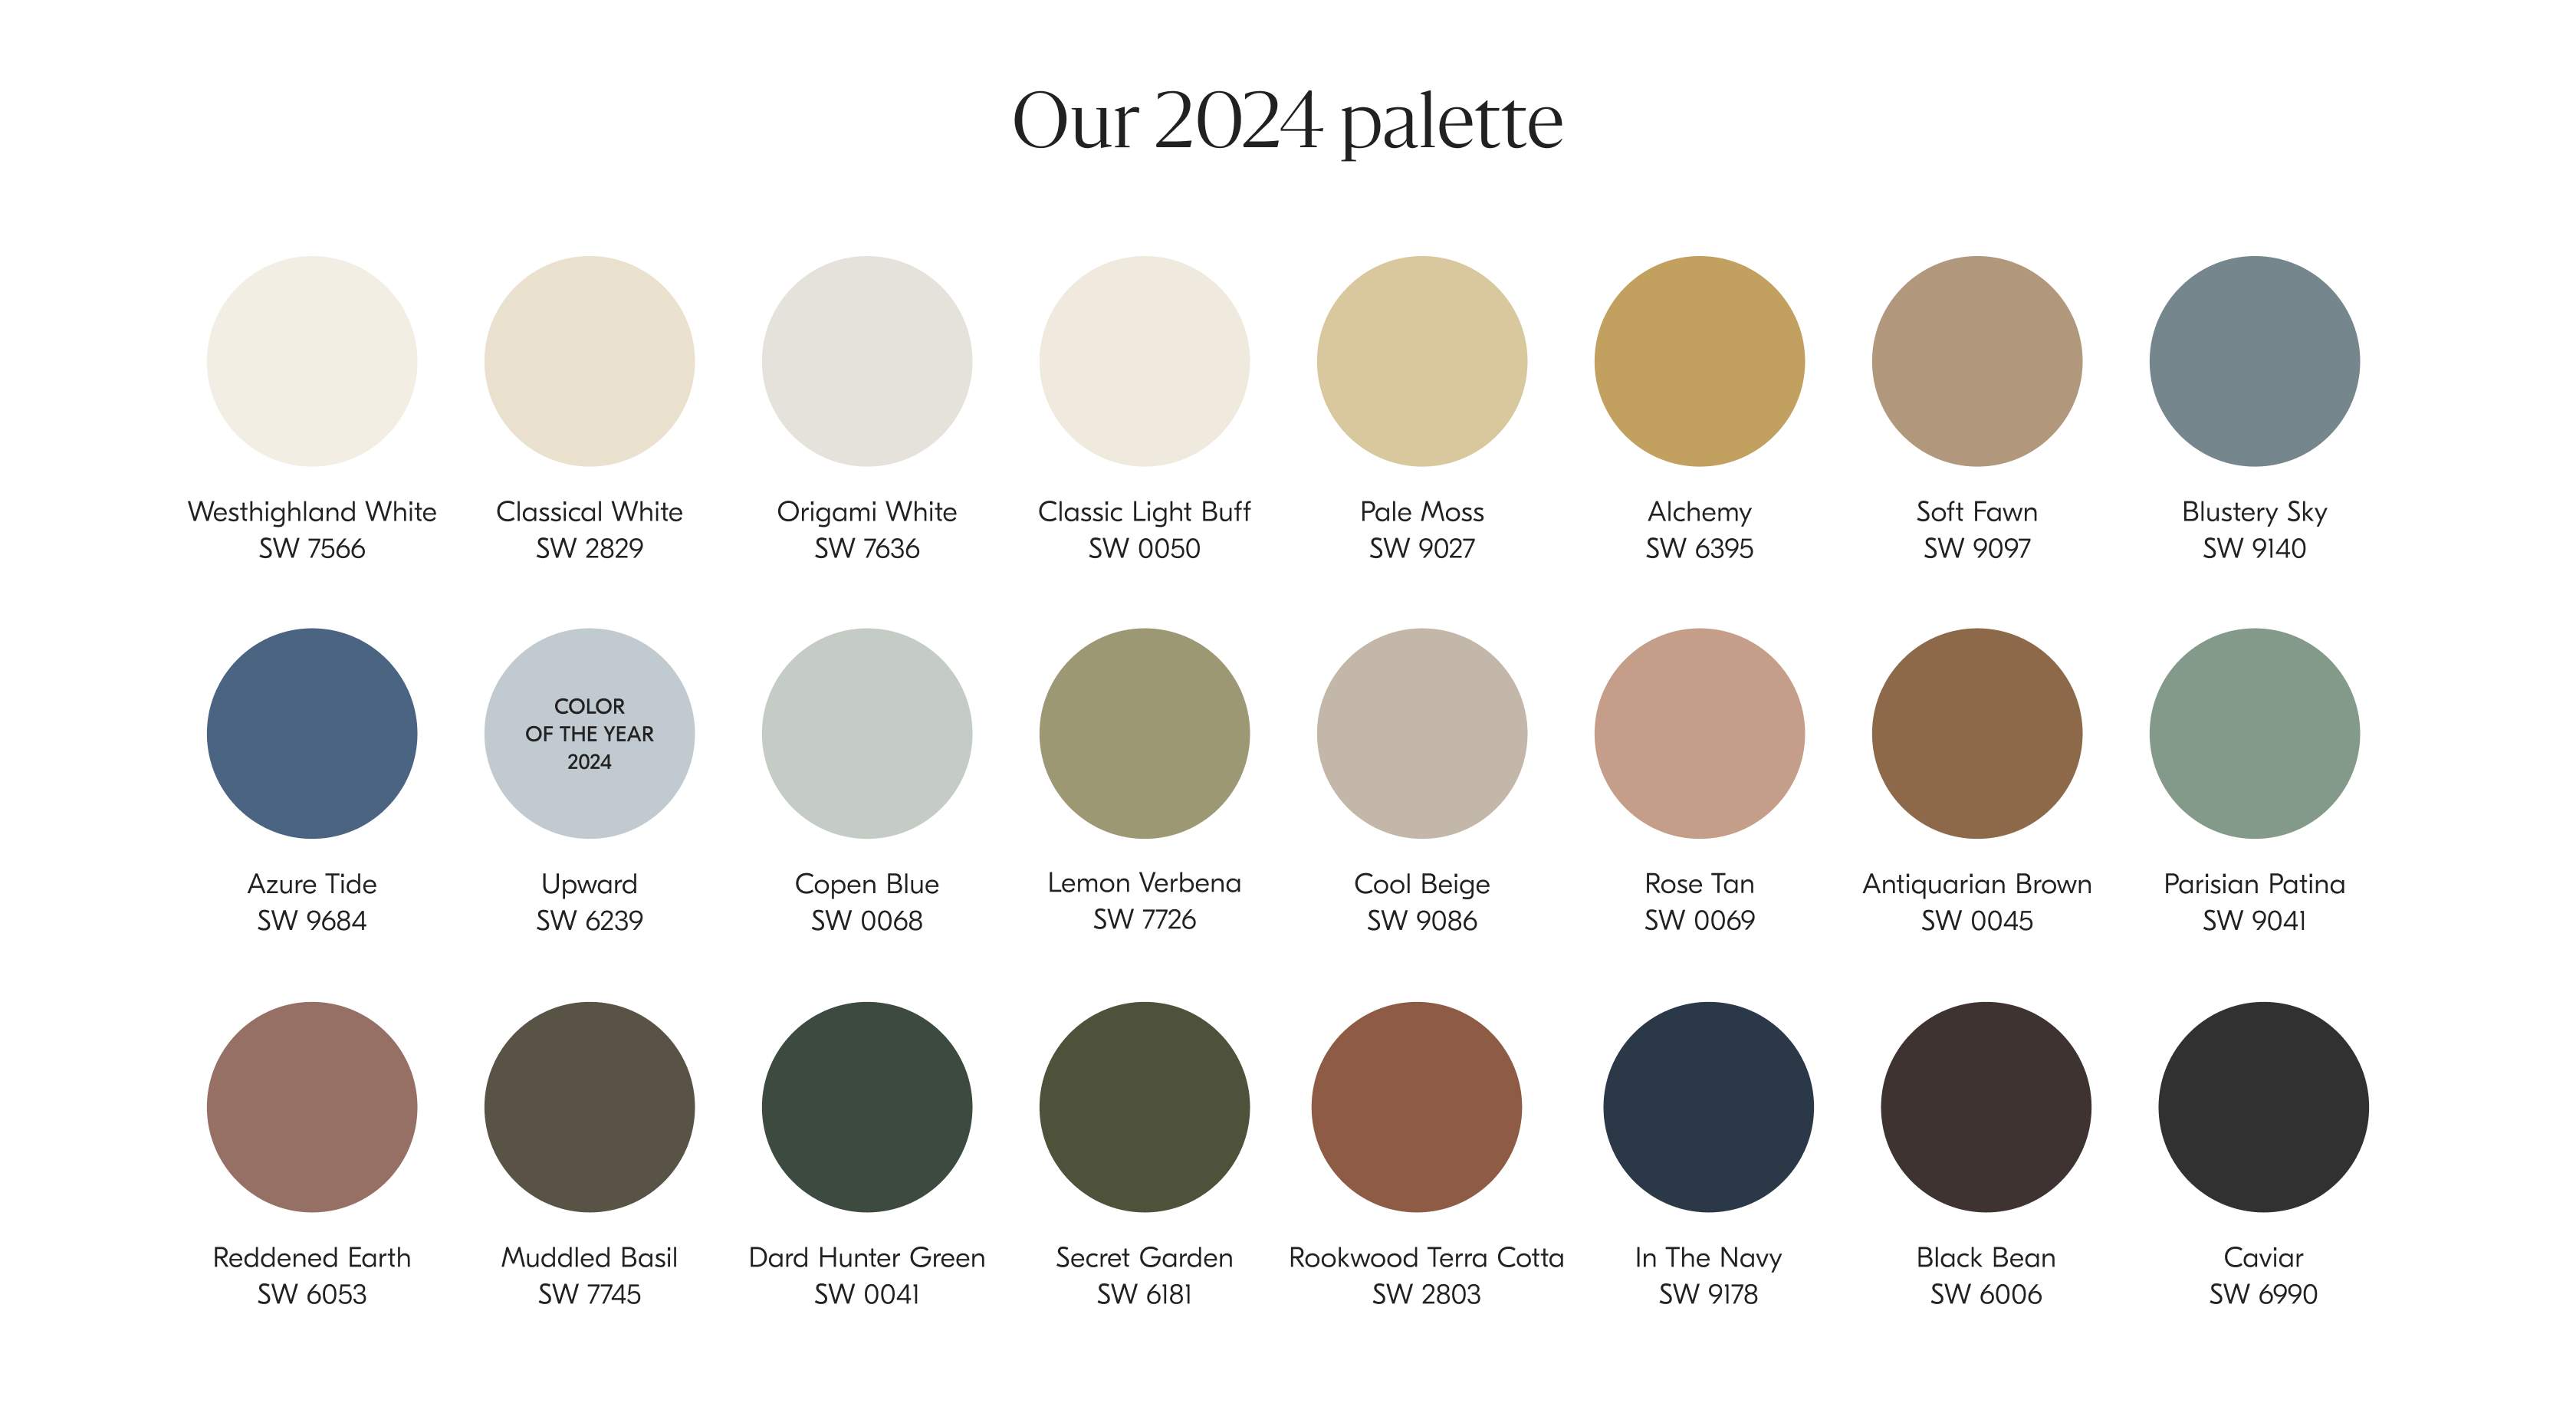 Our 2024 palette